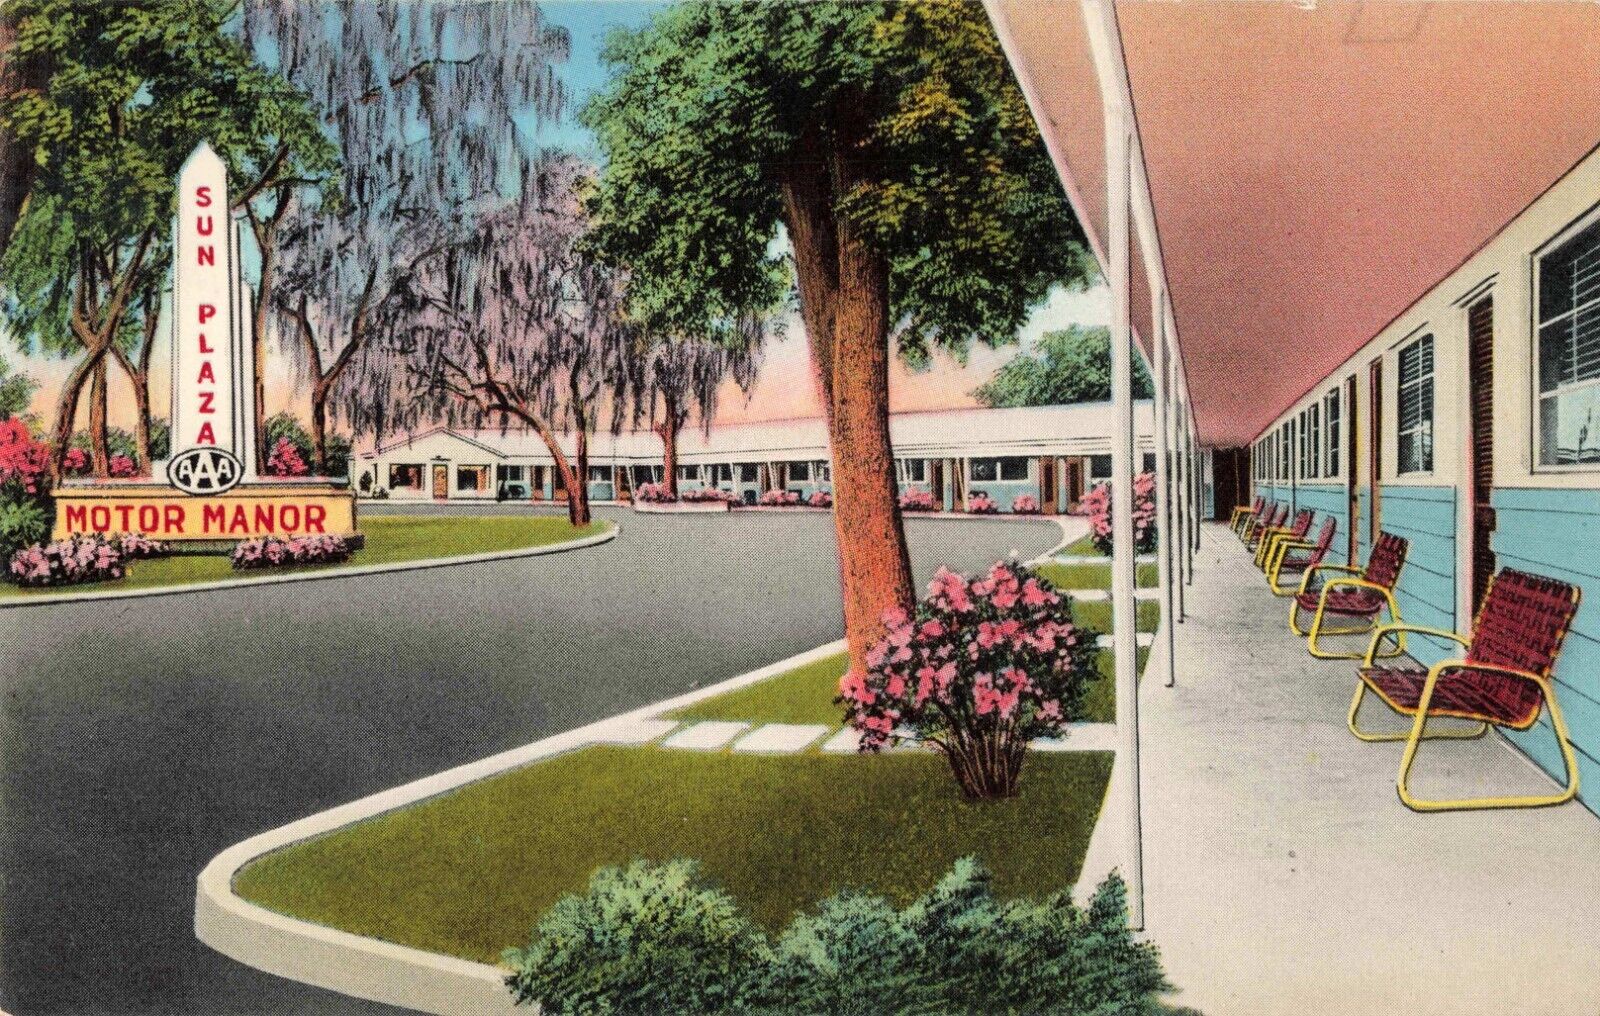 Silver Springs Florida, Sun Plaza Motor Manor Motel Advertising Vintage Postcard